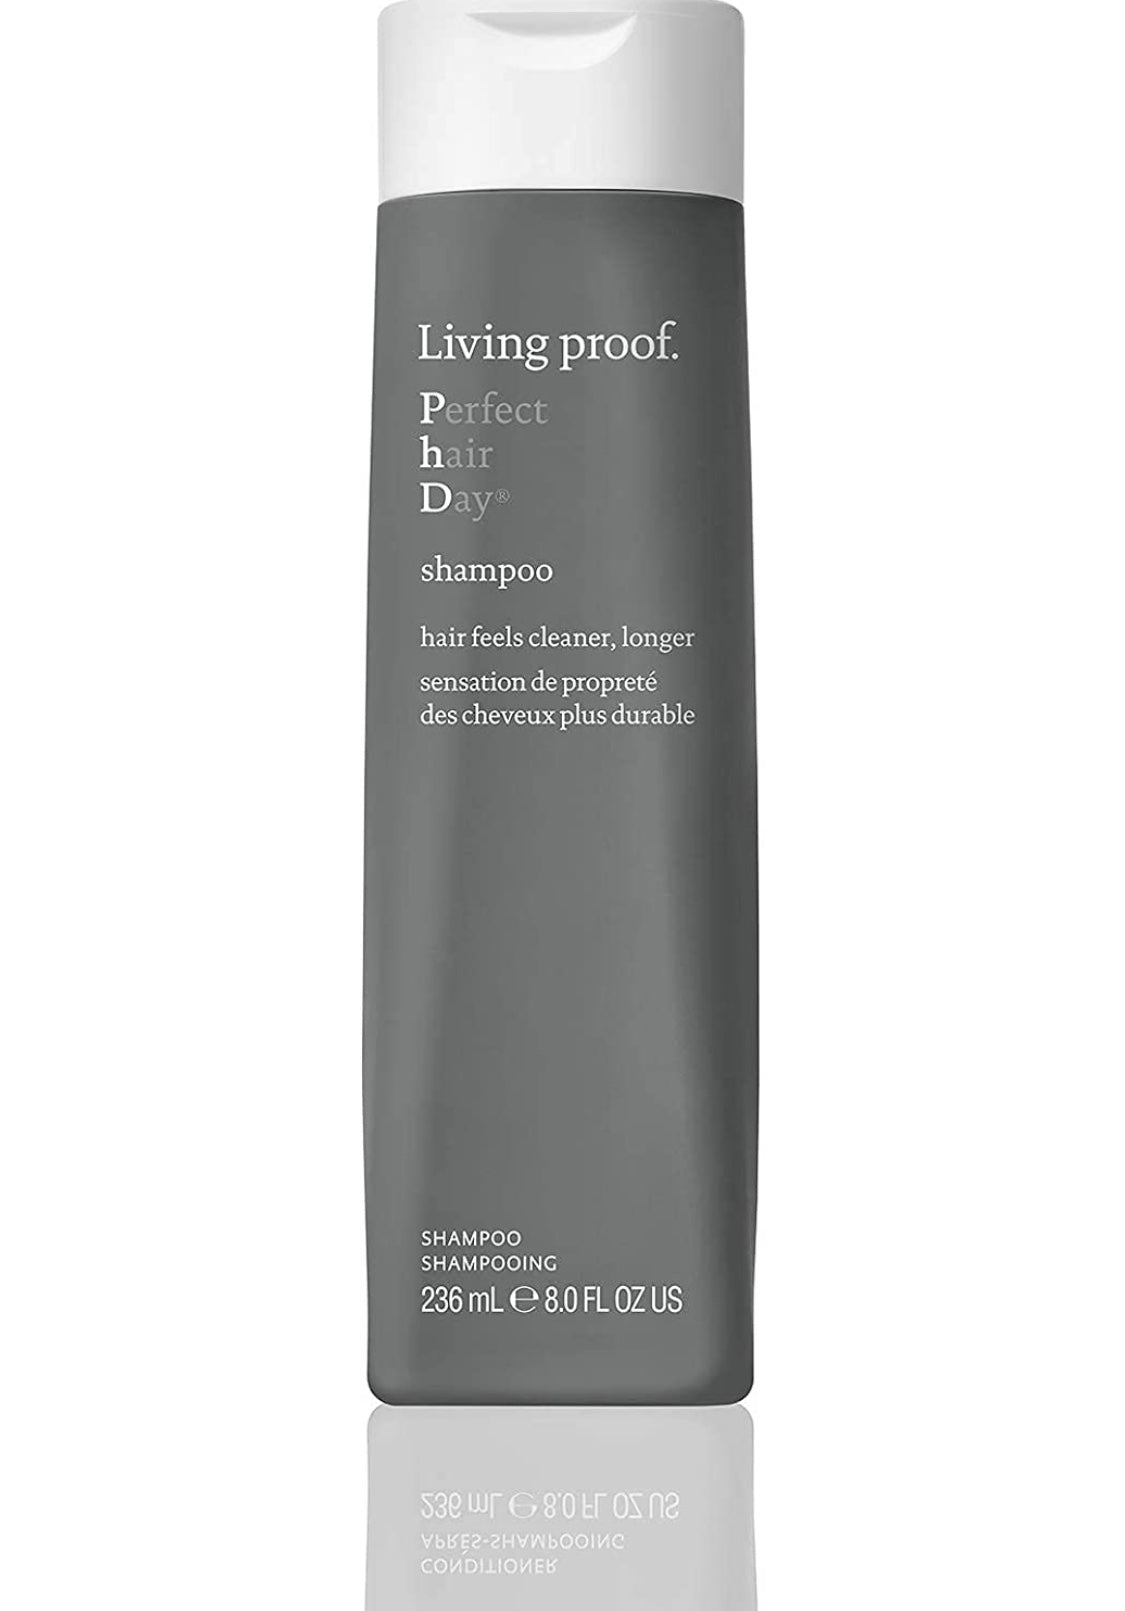 Living proof - Perfect hair Day shampoo 8 fl. oz./ 236 ml